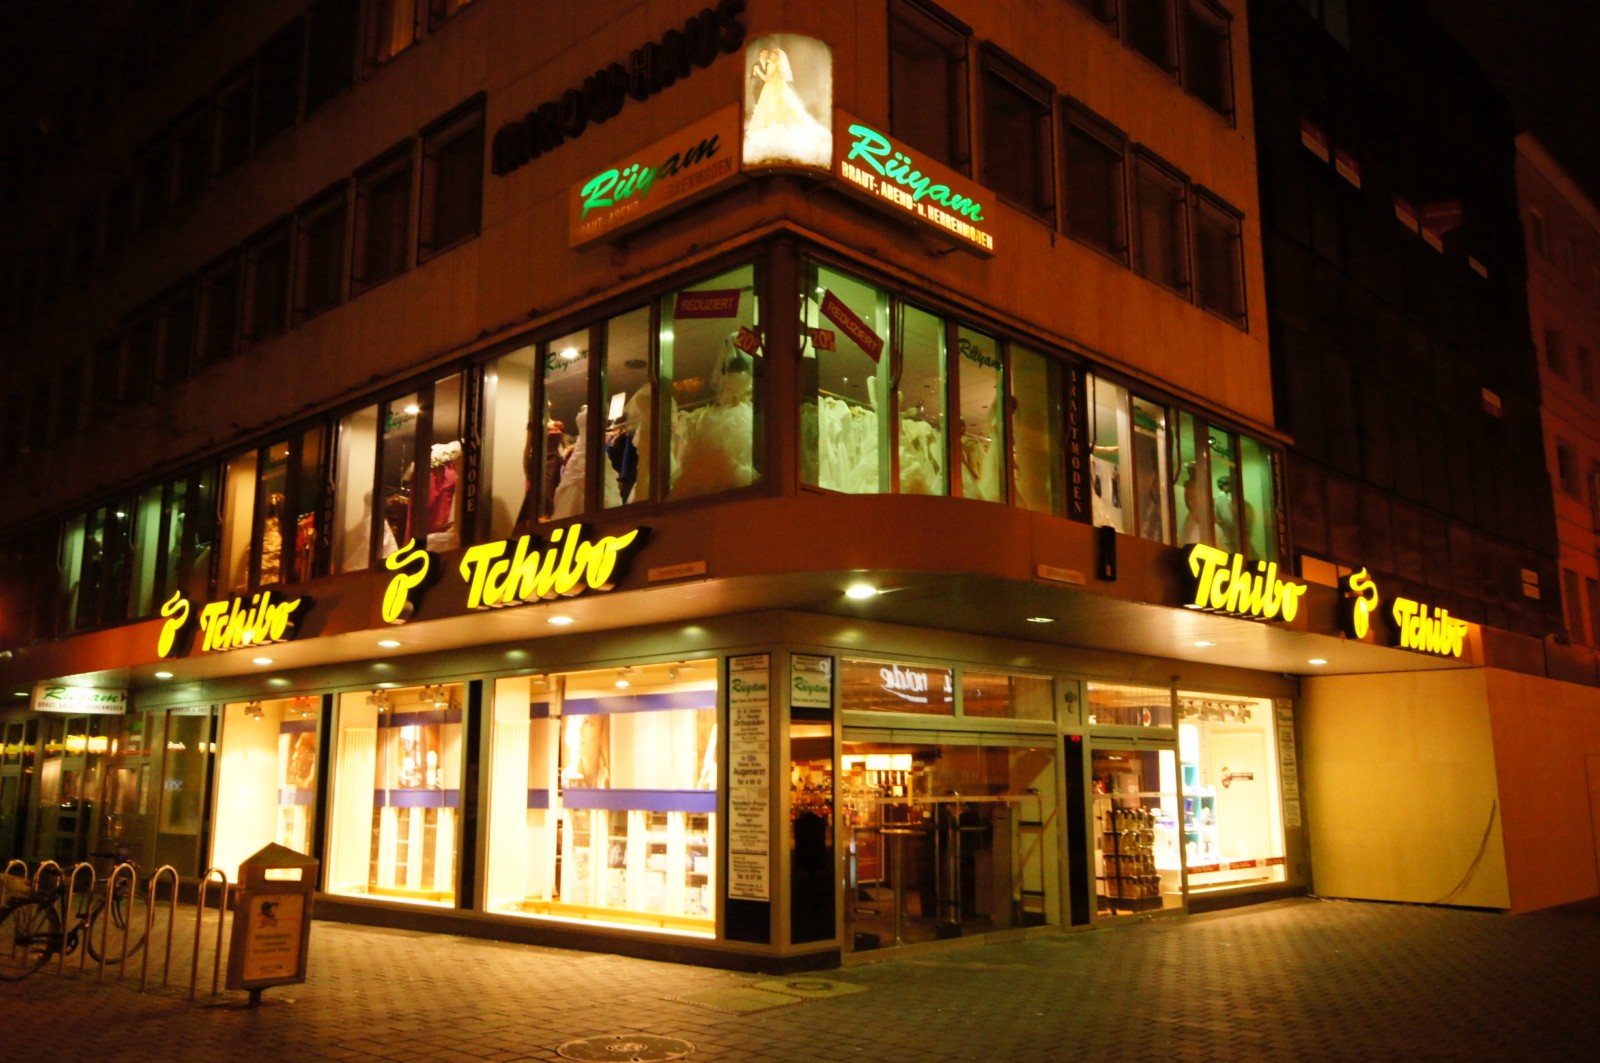 Tchibo Filiale mit Kaffee Bar in 33602 Bielefeld-Innenstadt